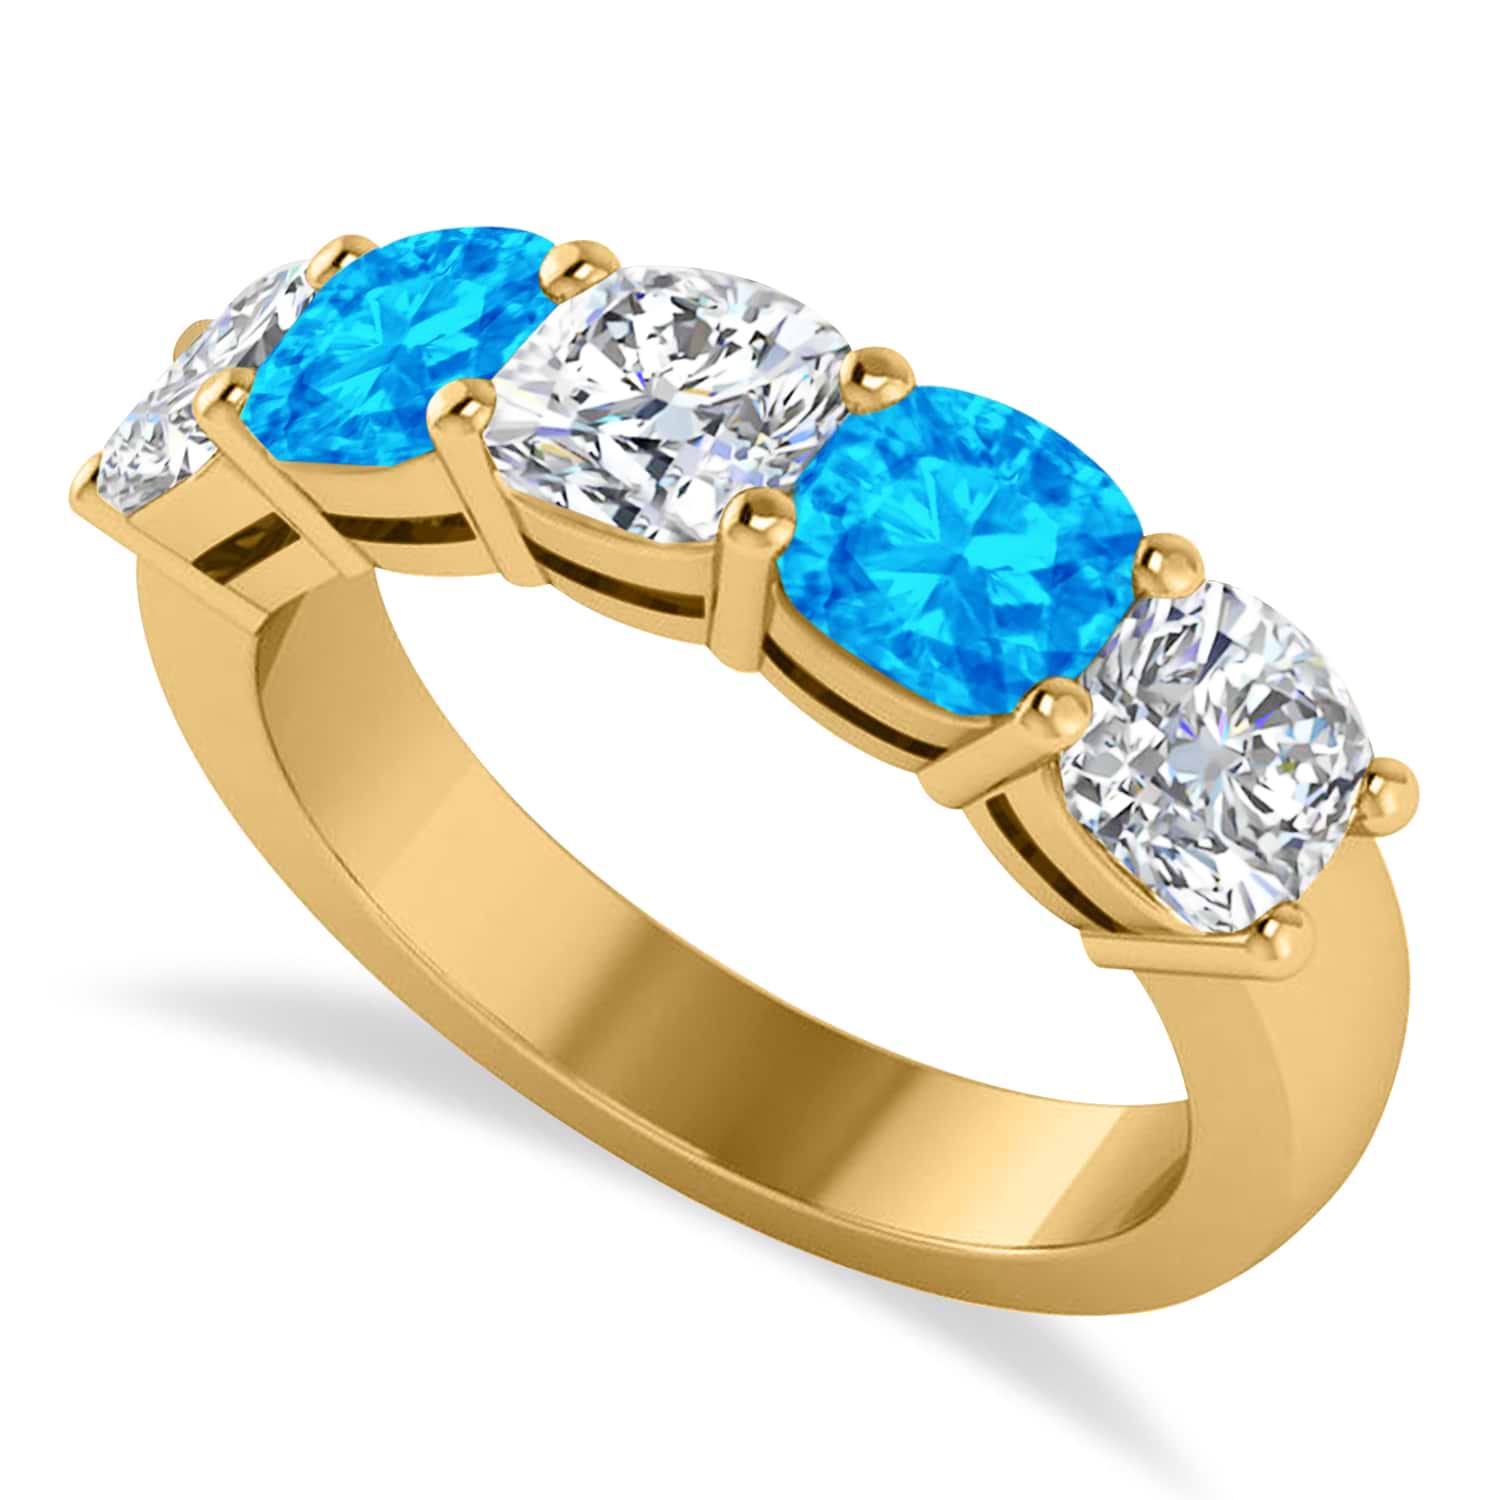 Cushion Diamond & Blue Topaz Five Stone Ring 14k Yellow Gold (2.70ct)